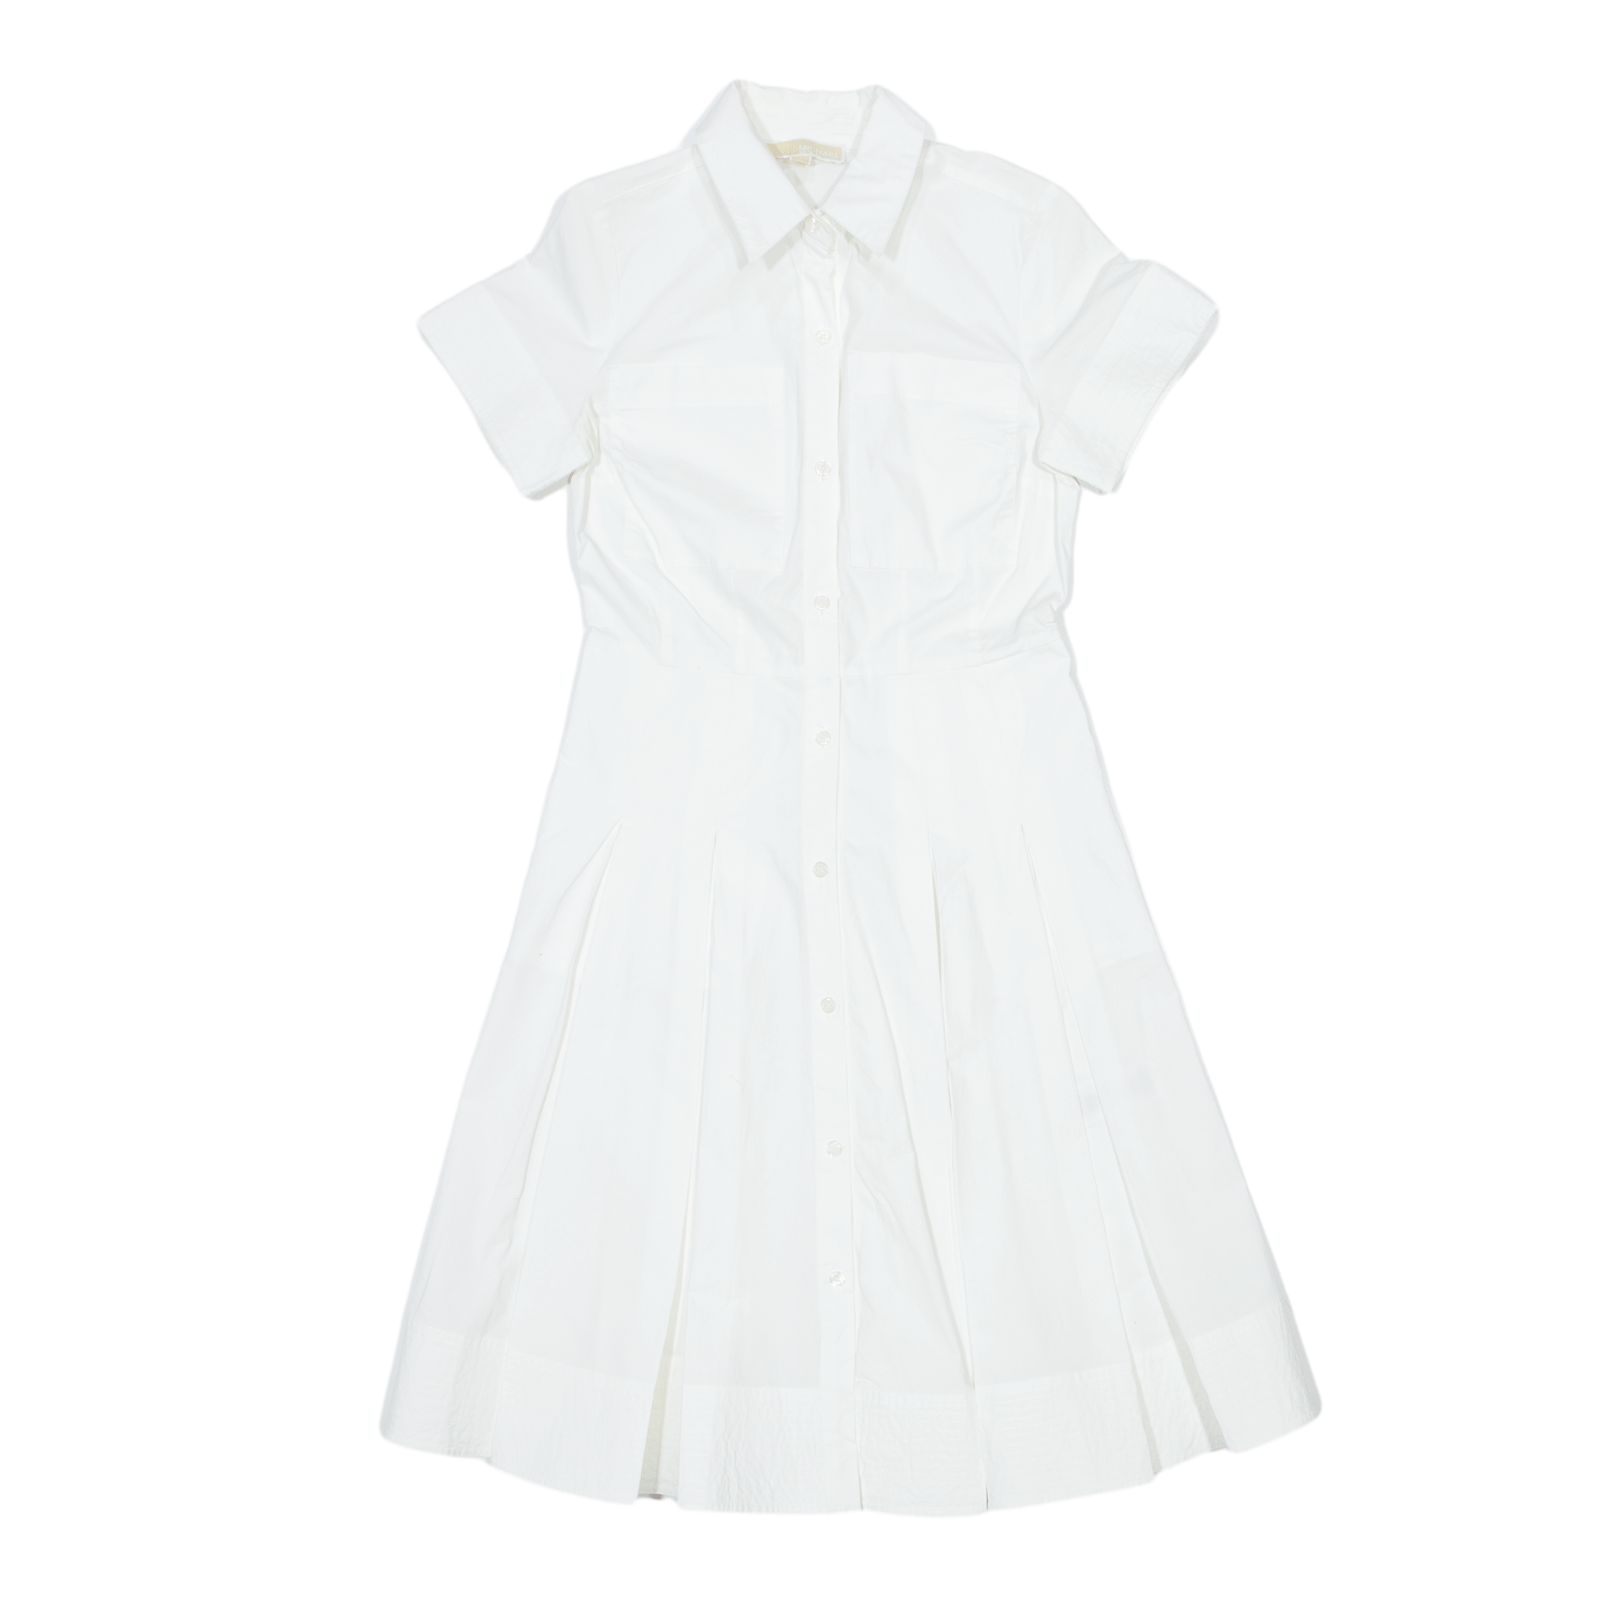 MICHAEL KORS Pleated Shirt Dress White Short Sleeve Midi Womens UK 4 | eBay UK